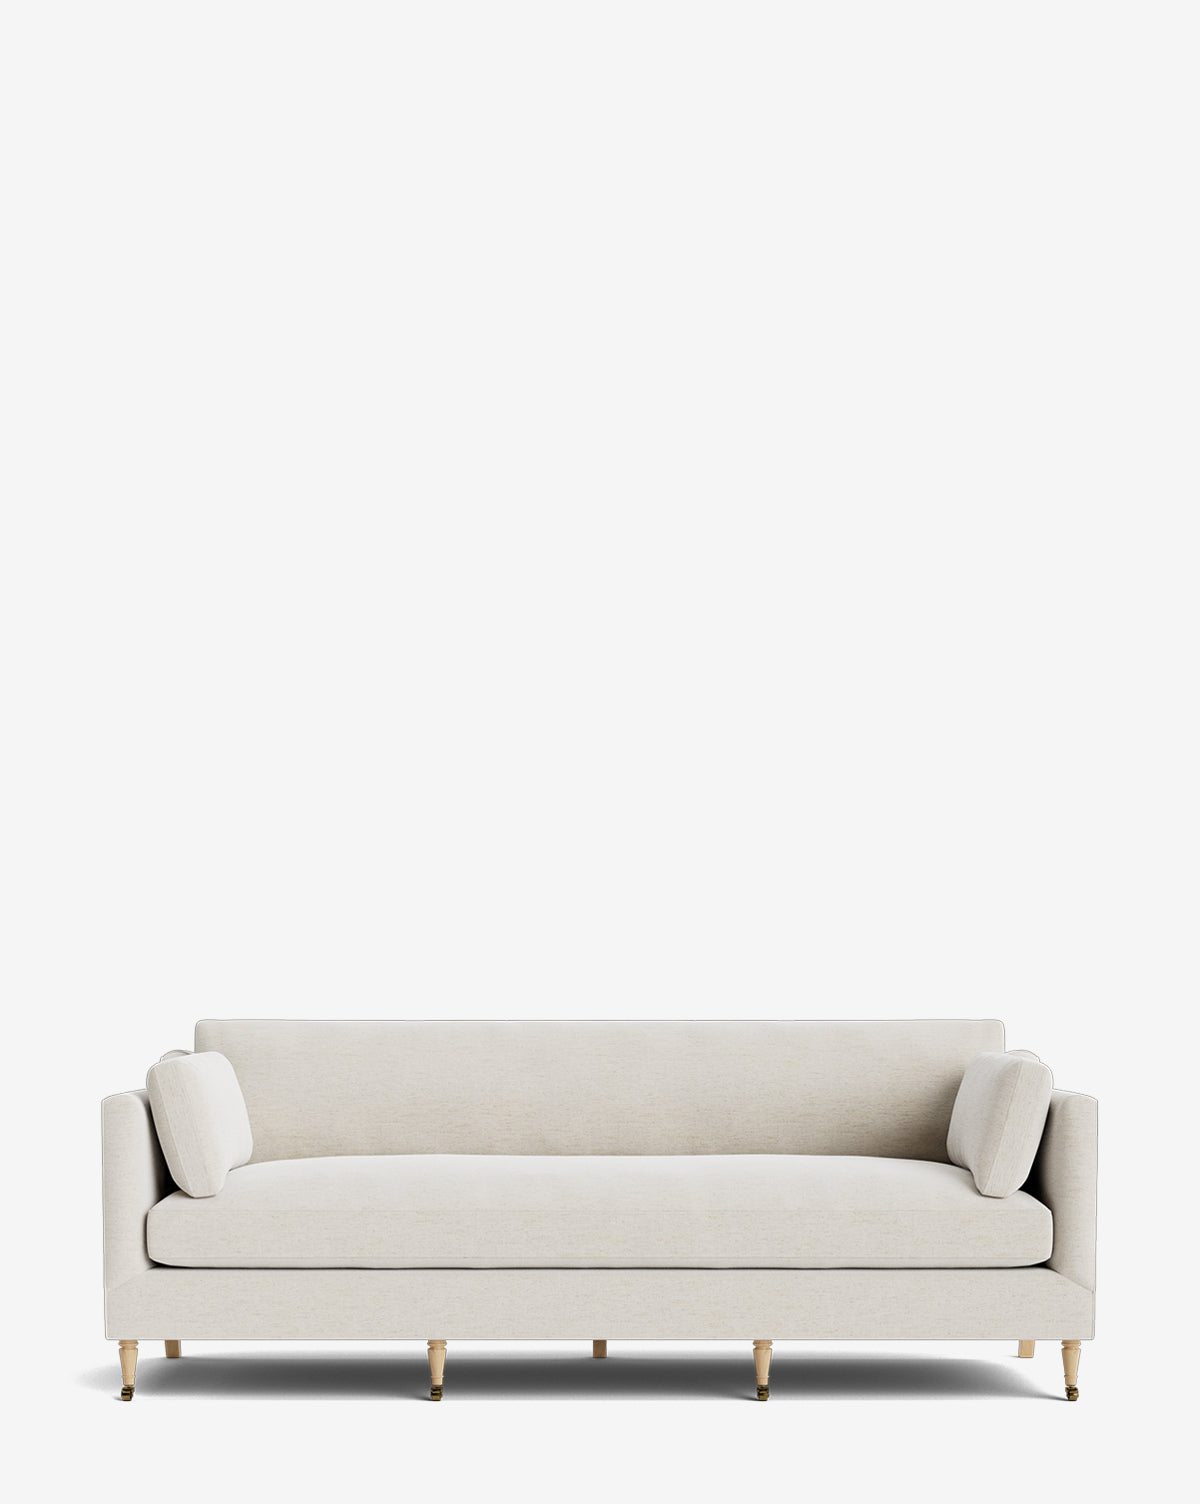 Rowe Fine Furniture, Haverford Upholstered Sofa